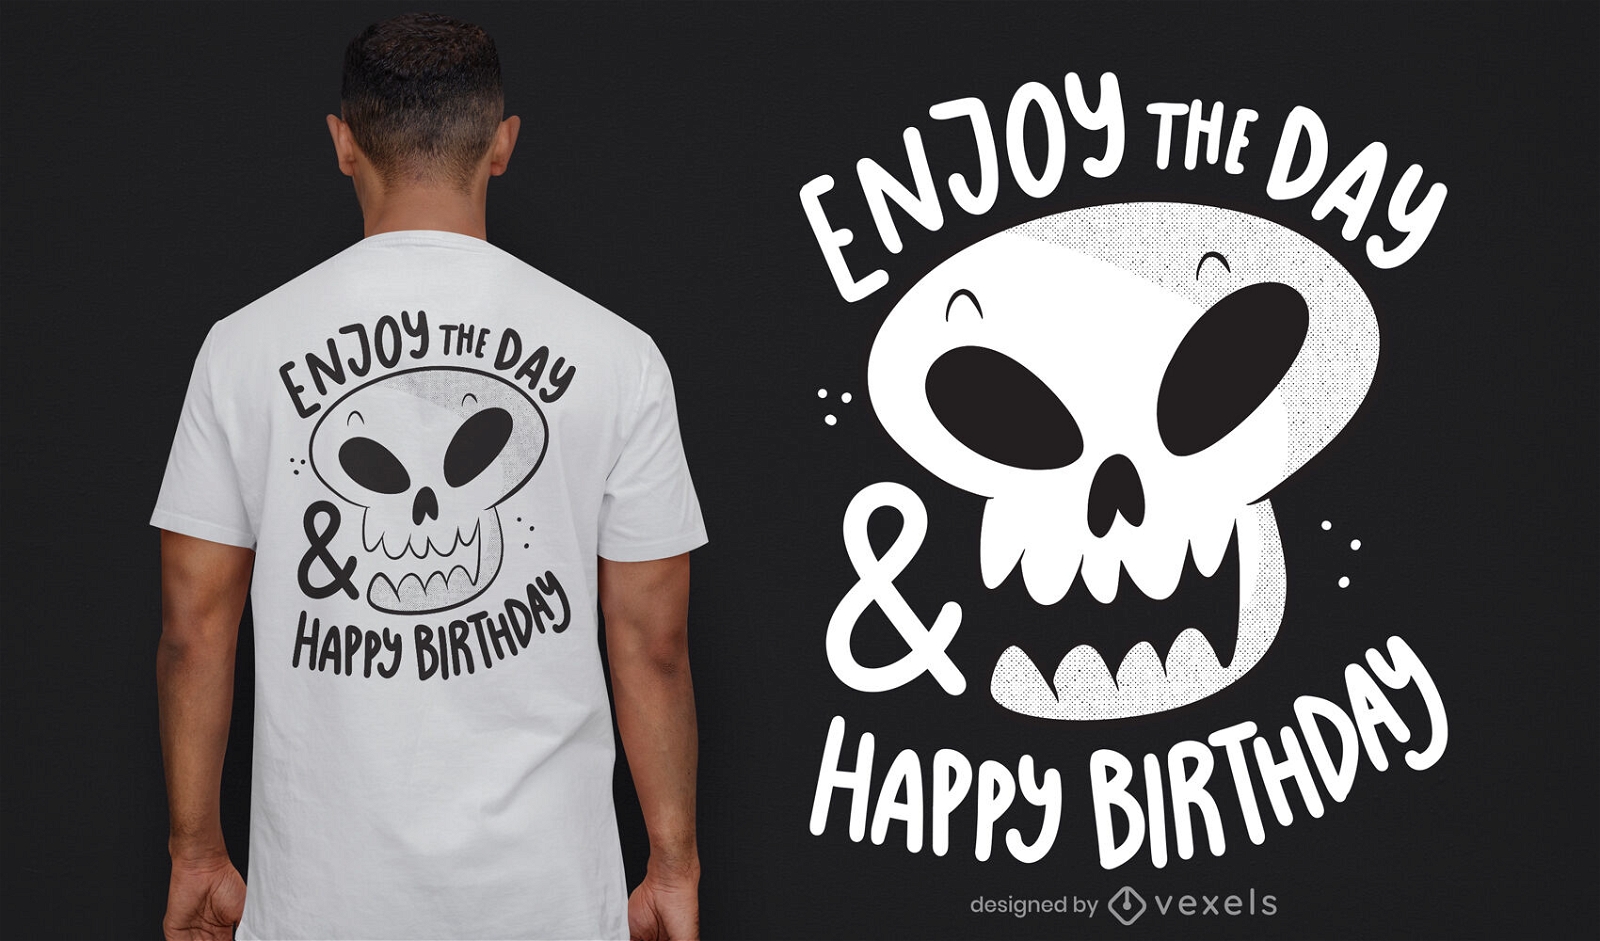 Happy birthday skull t-shirt design 